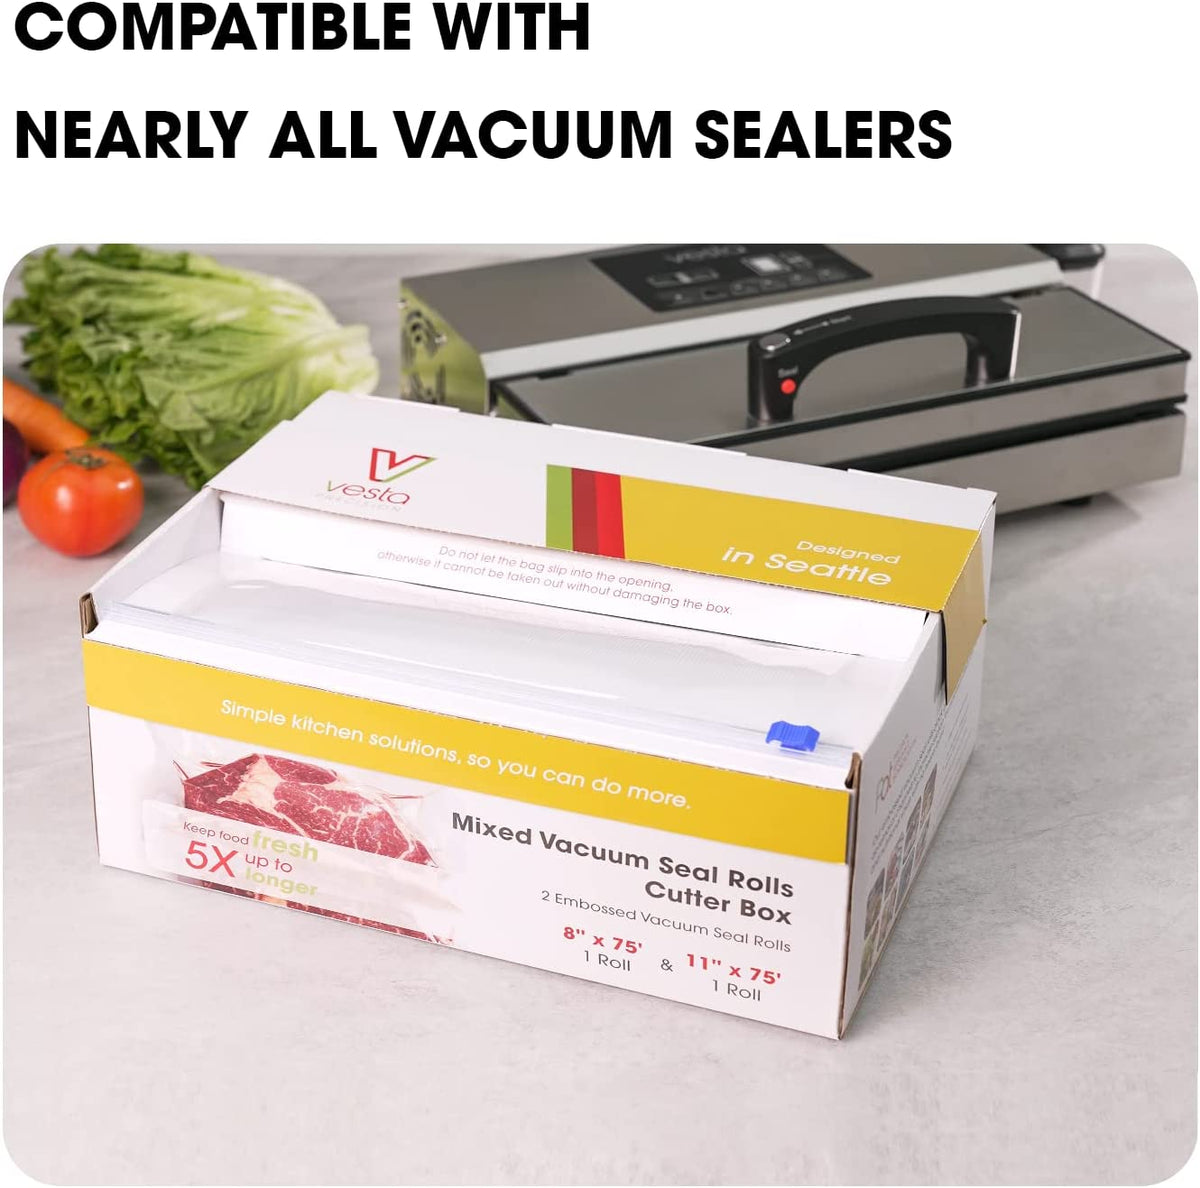 Vacuum Seal Rolls with Cutter Box Medium - 8x150